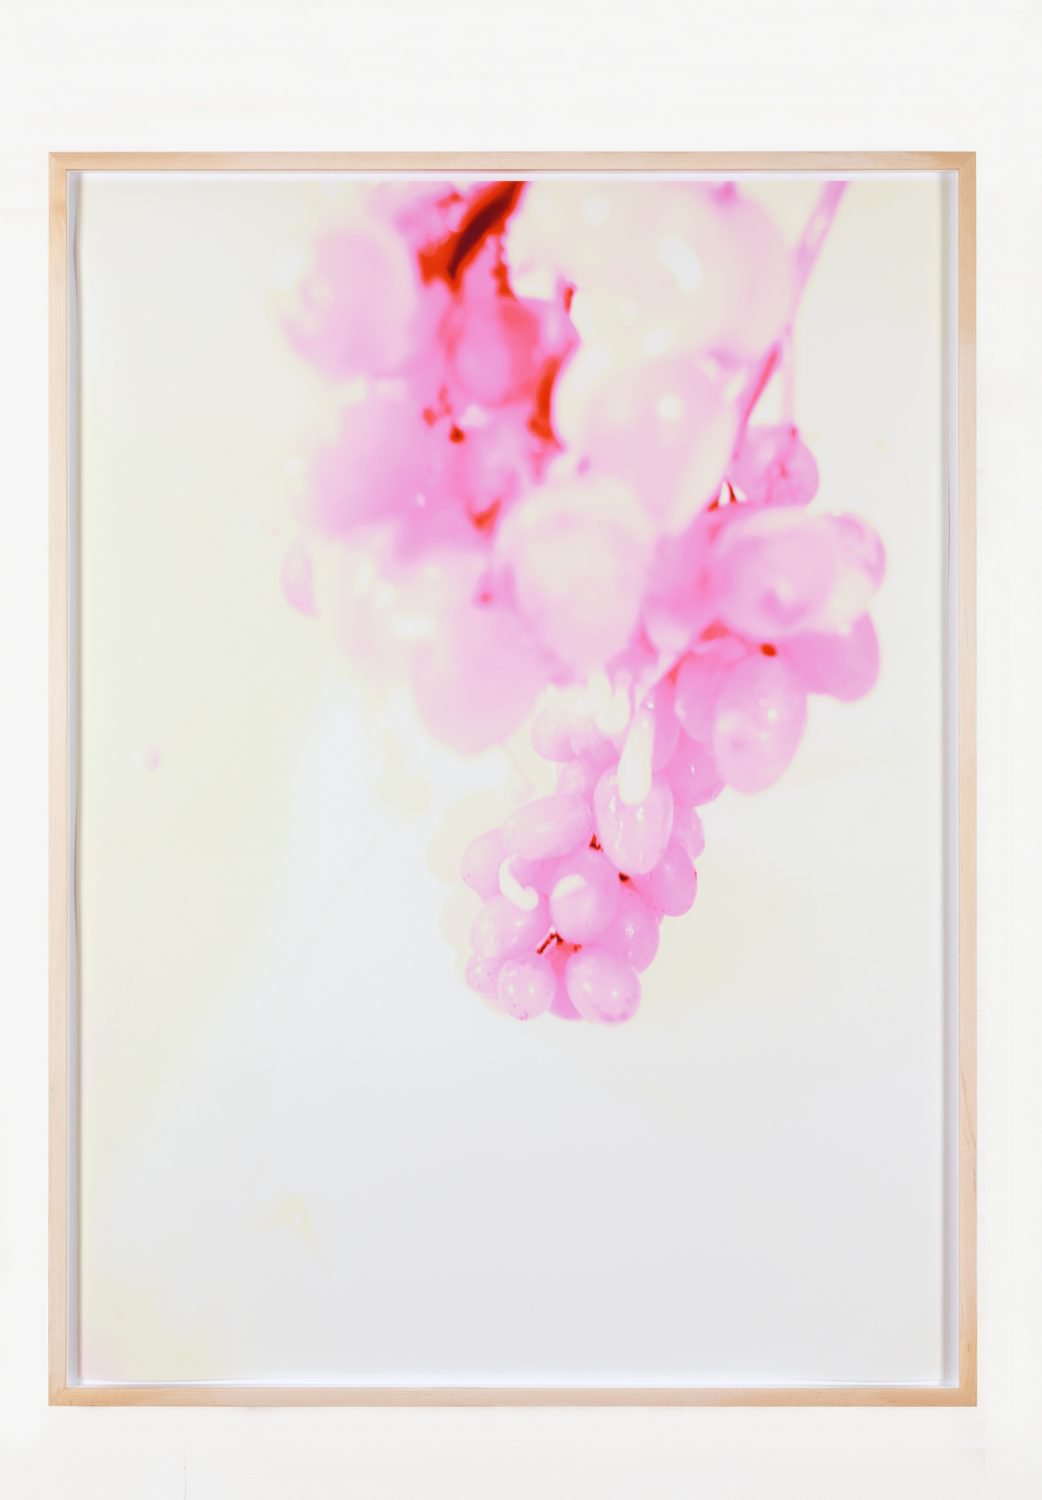 Lisa Holzer, Trauben, 2019Pigment print on cotton paper, semigloss enamel on wood110.3 x 81.4cm